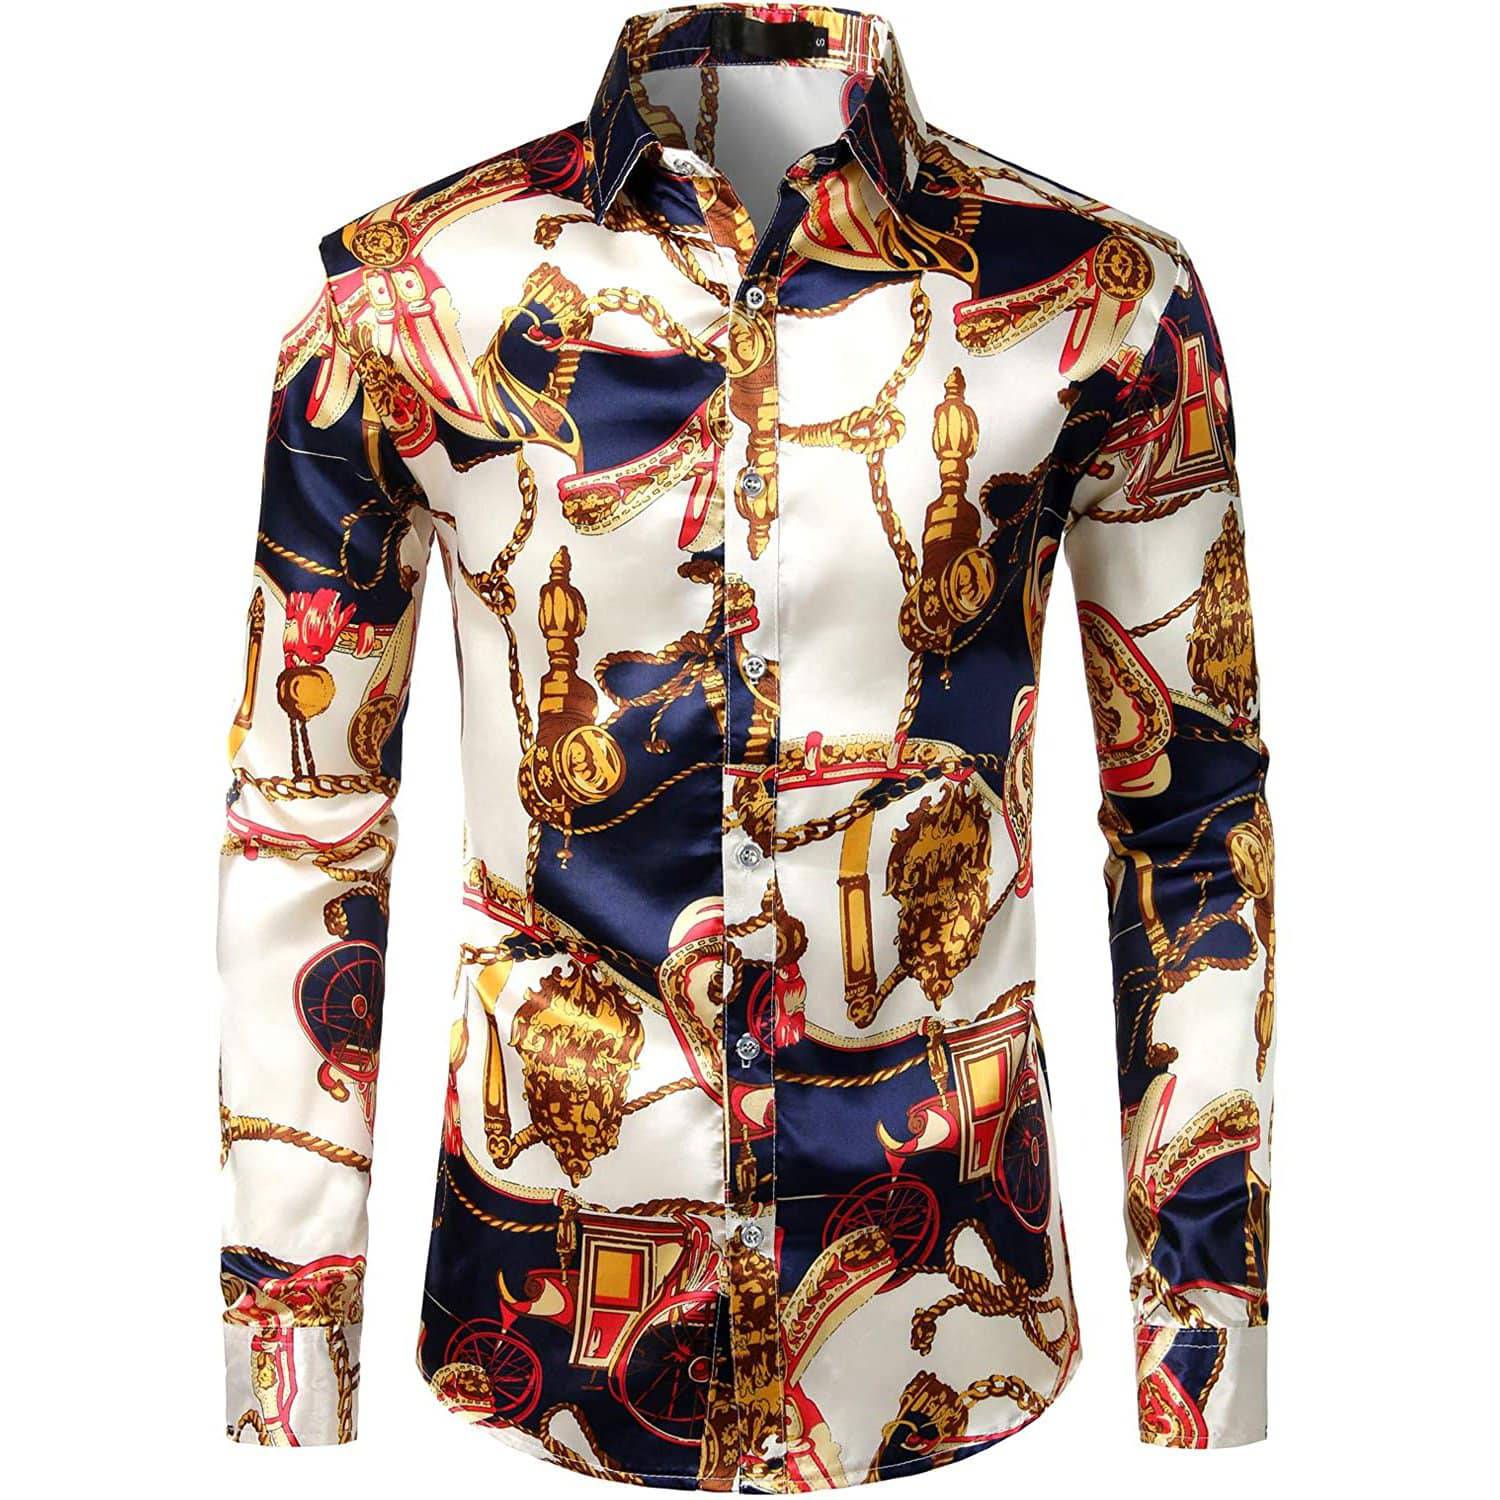 flise I øvrigt opladning Men's Silk Dress Shirt Luxury Printed Long Sleeve Silk Shirts